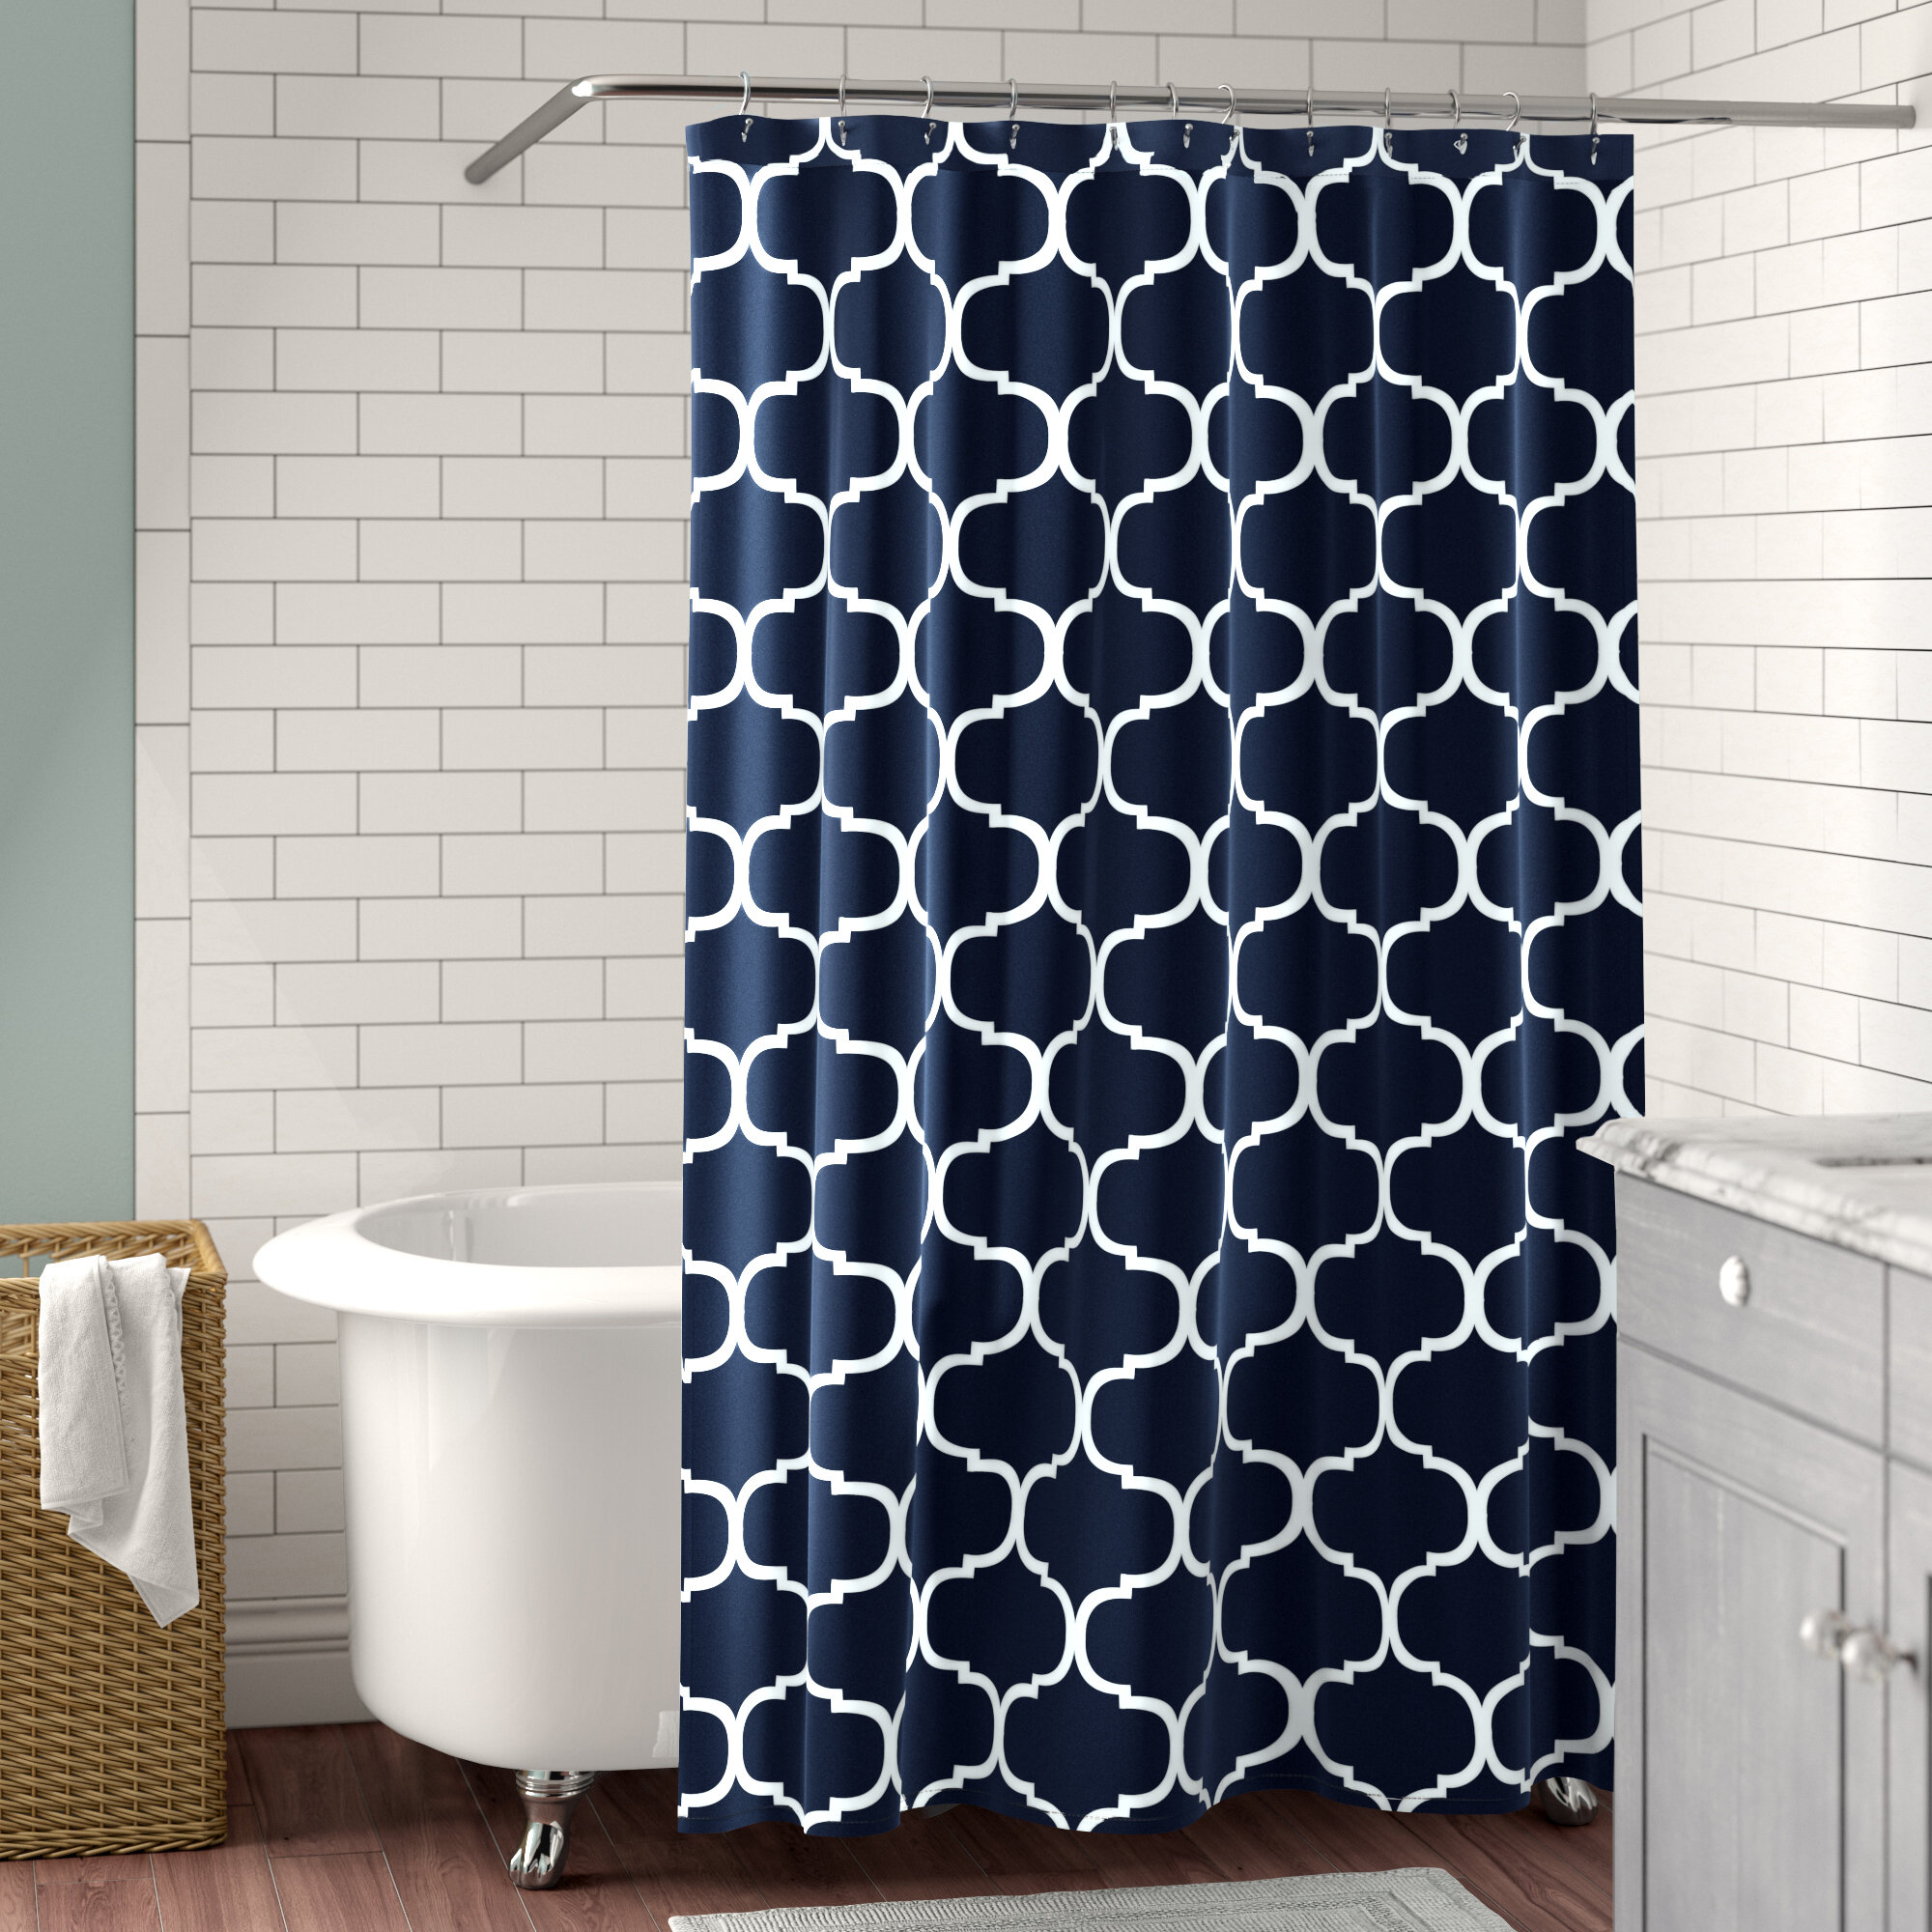 Geometric Pencil Nib White Shower Curtain Waterproof Fabric Bathroom Mat Decor 